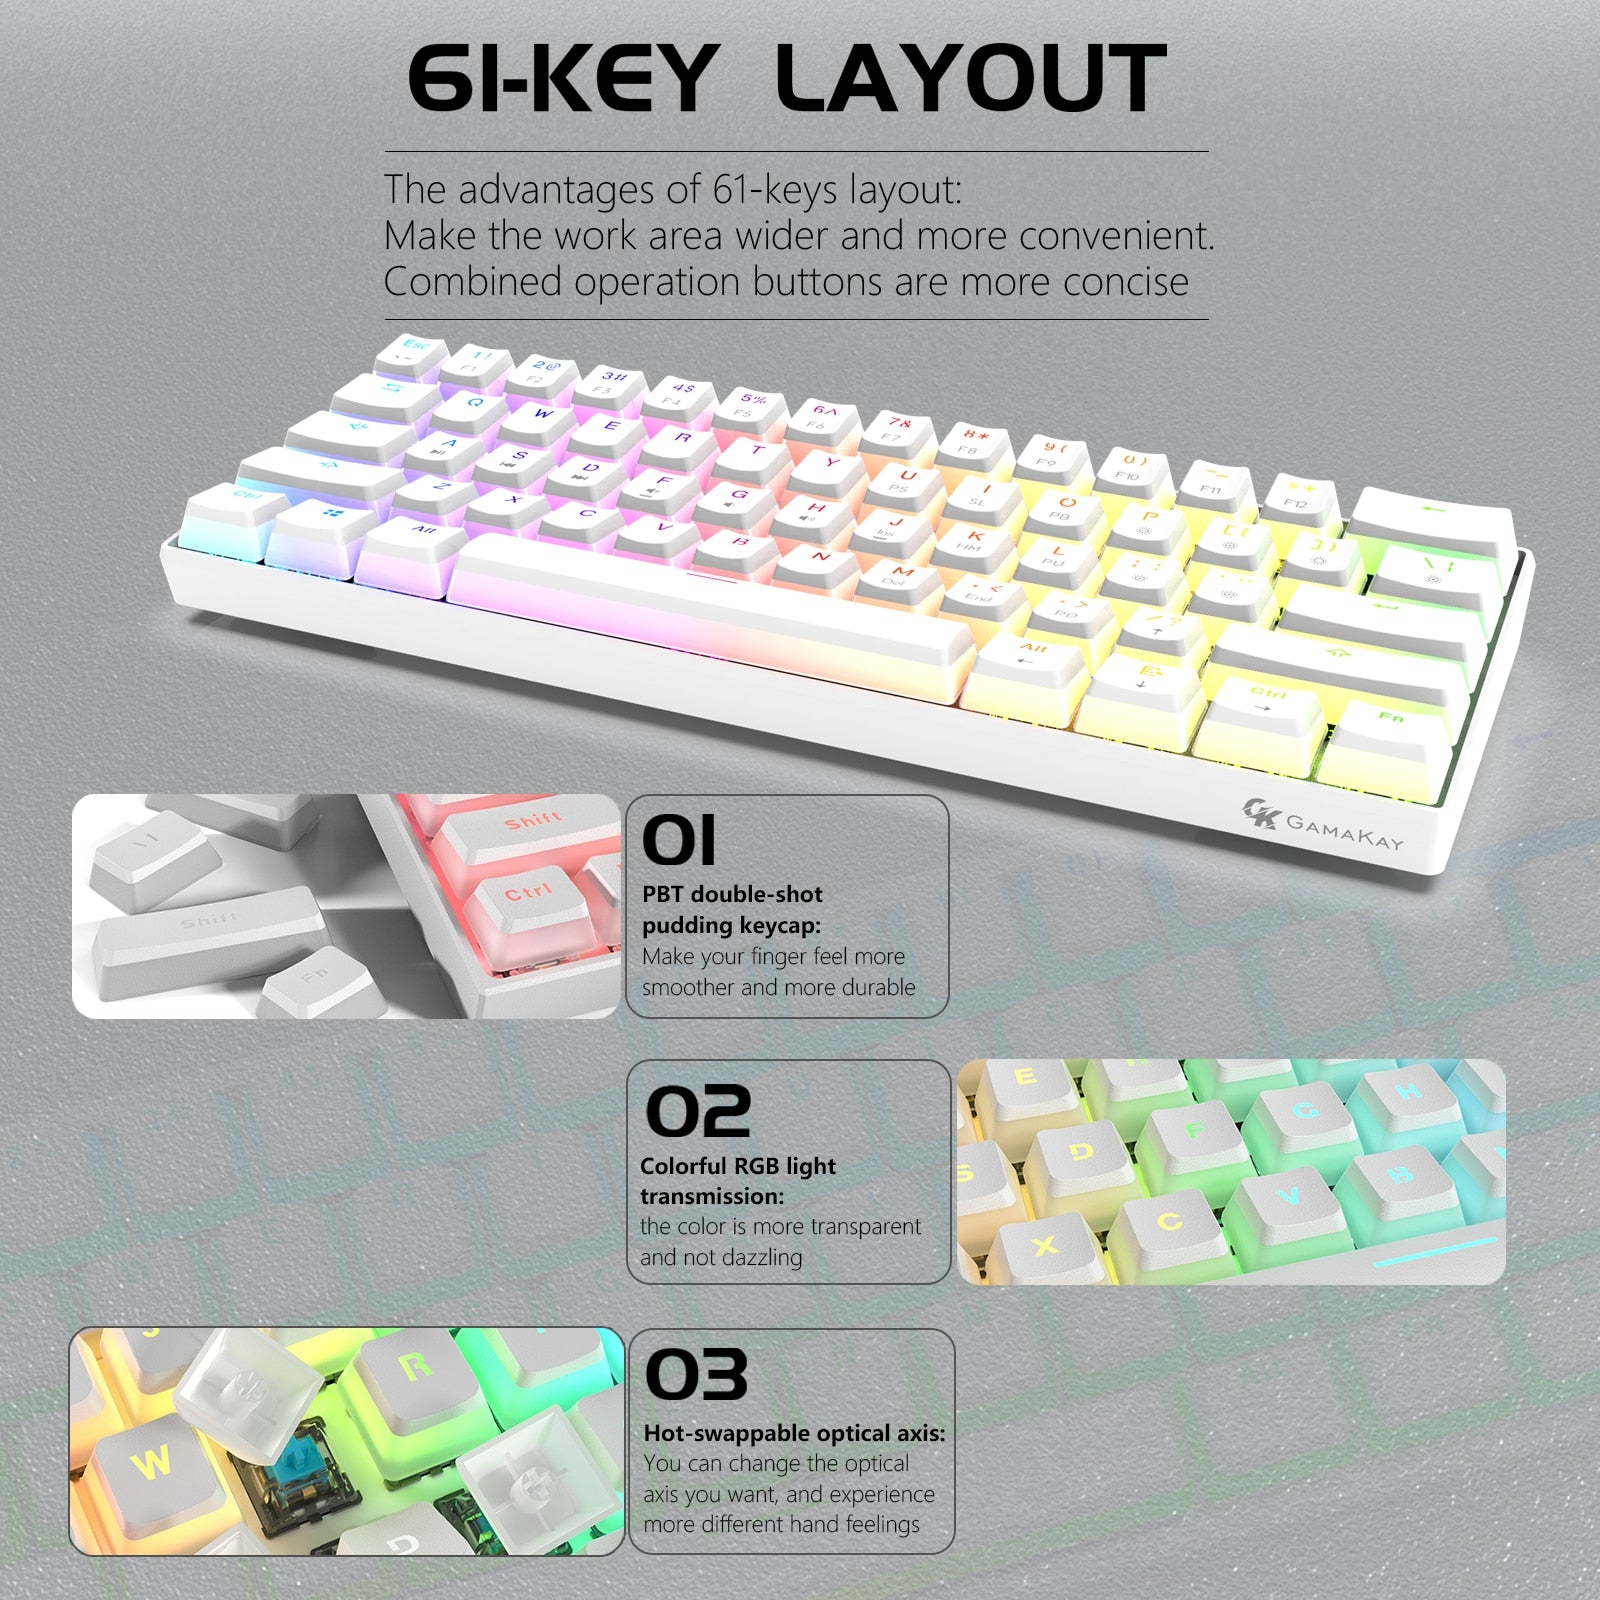 GamaKay MK61 60% Wired RGB Mechanical Keyboard Gateron Optical Switch Pudding Keycaps68 Keys Hot Swappable Gaming Keyboard